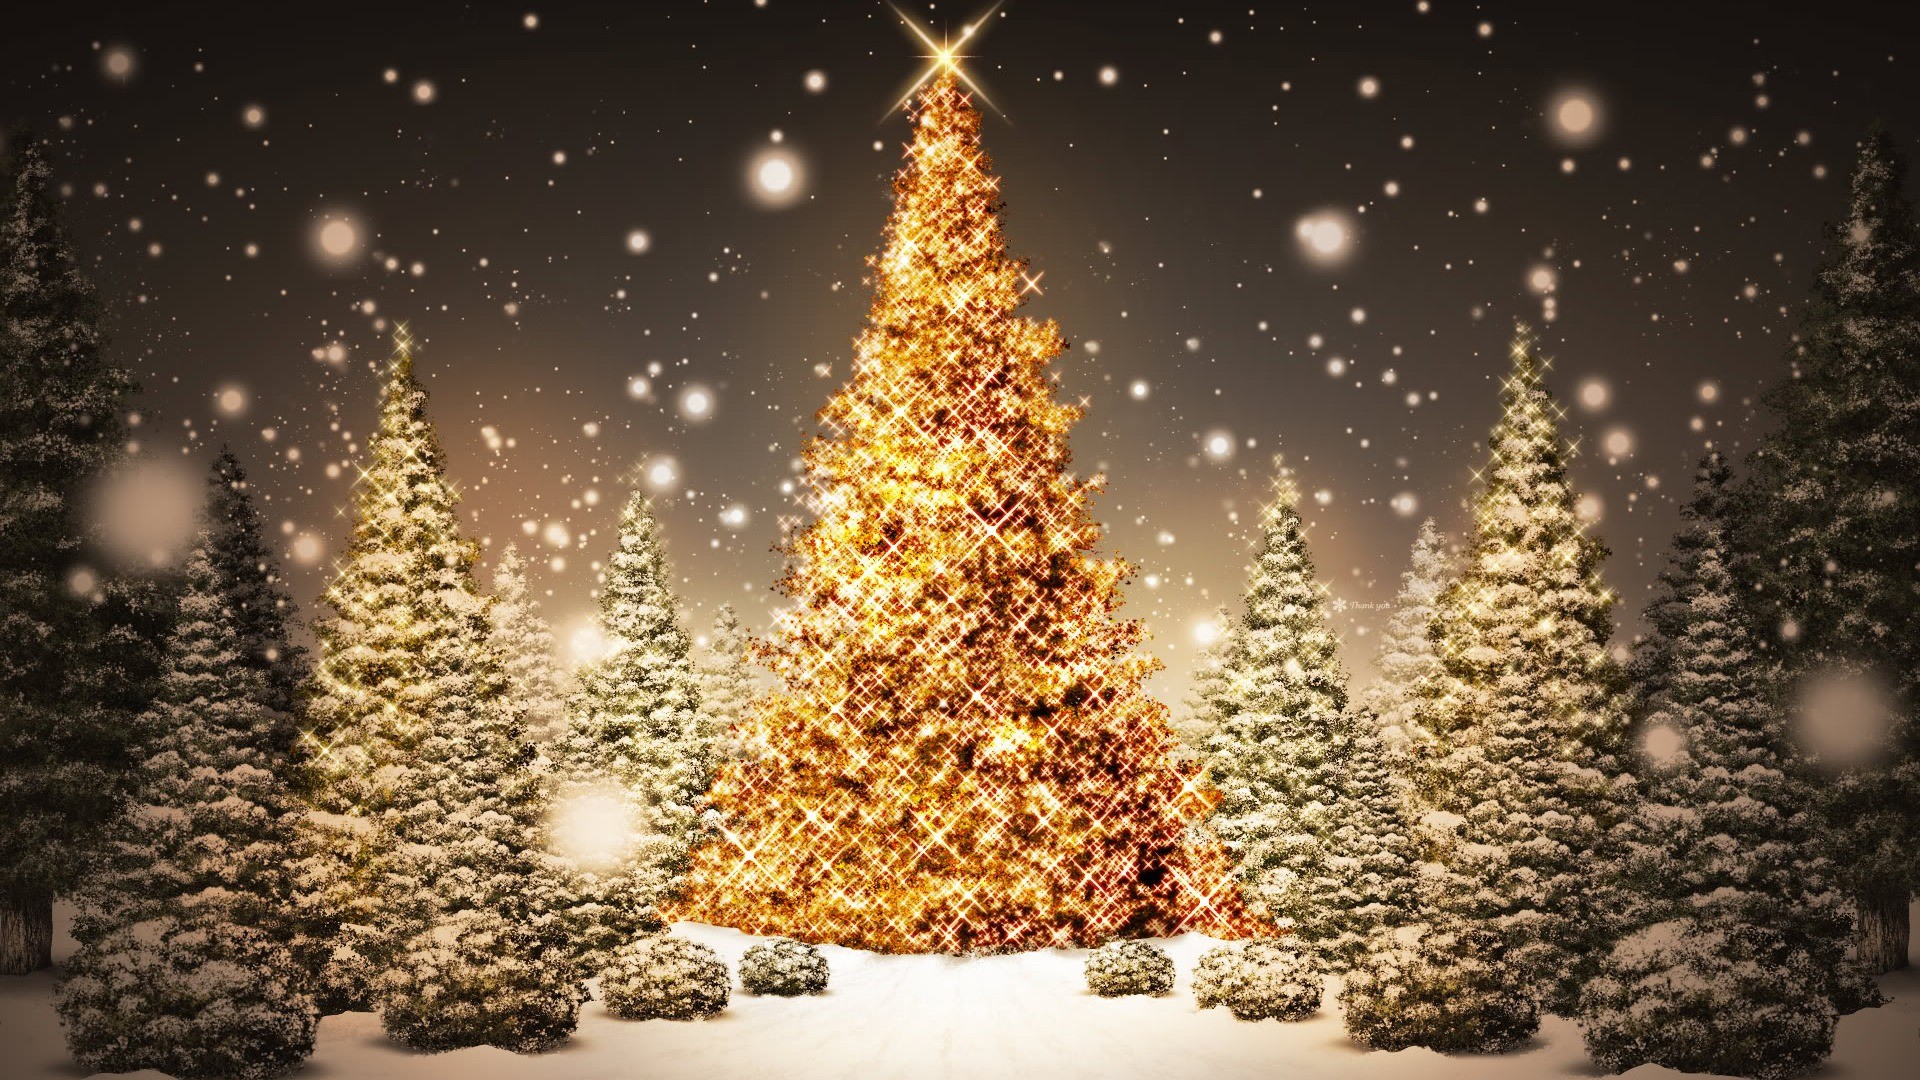 Awesome Christmas Lights High Resolution Wallpaper Image